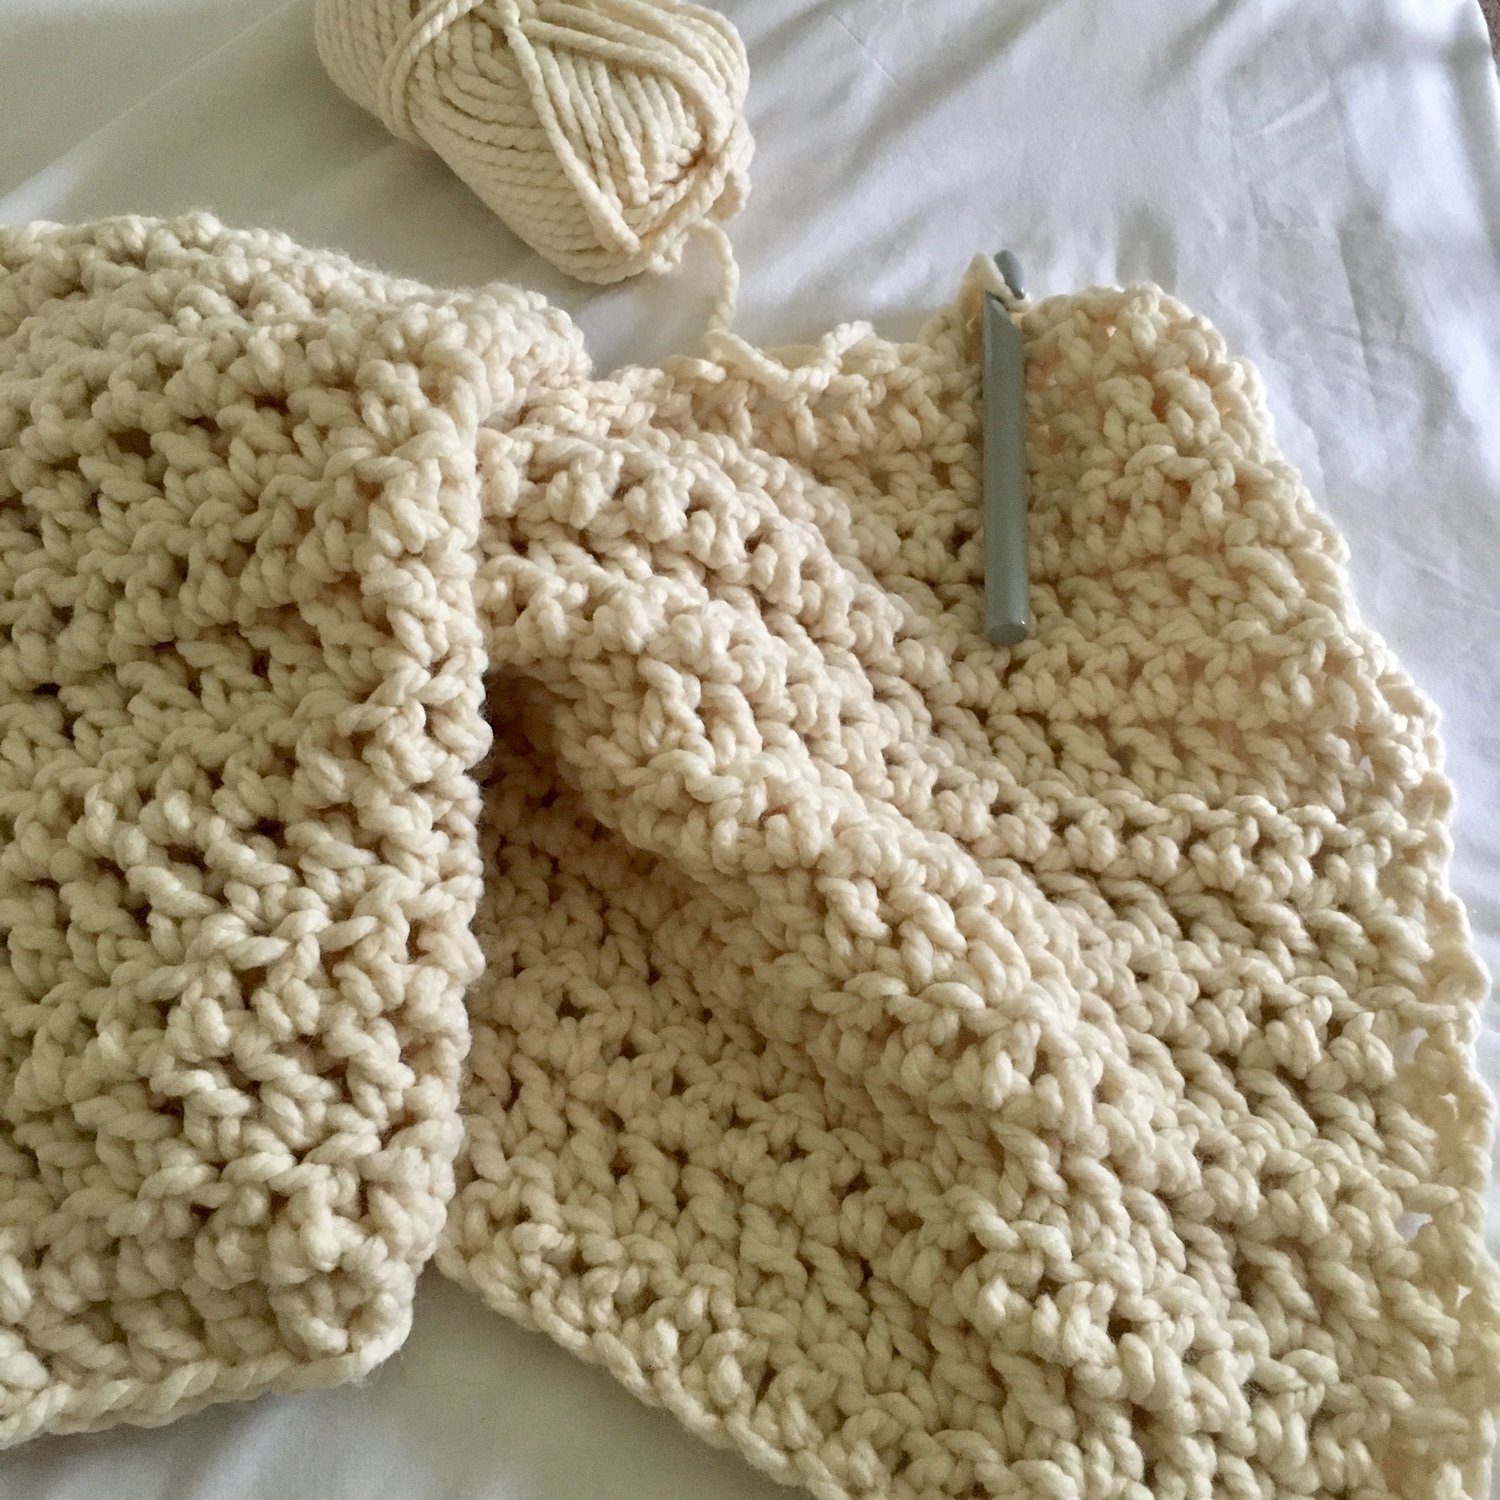 using a super chunky yarn for a chunky yarn blanket border : r/crochet